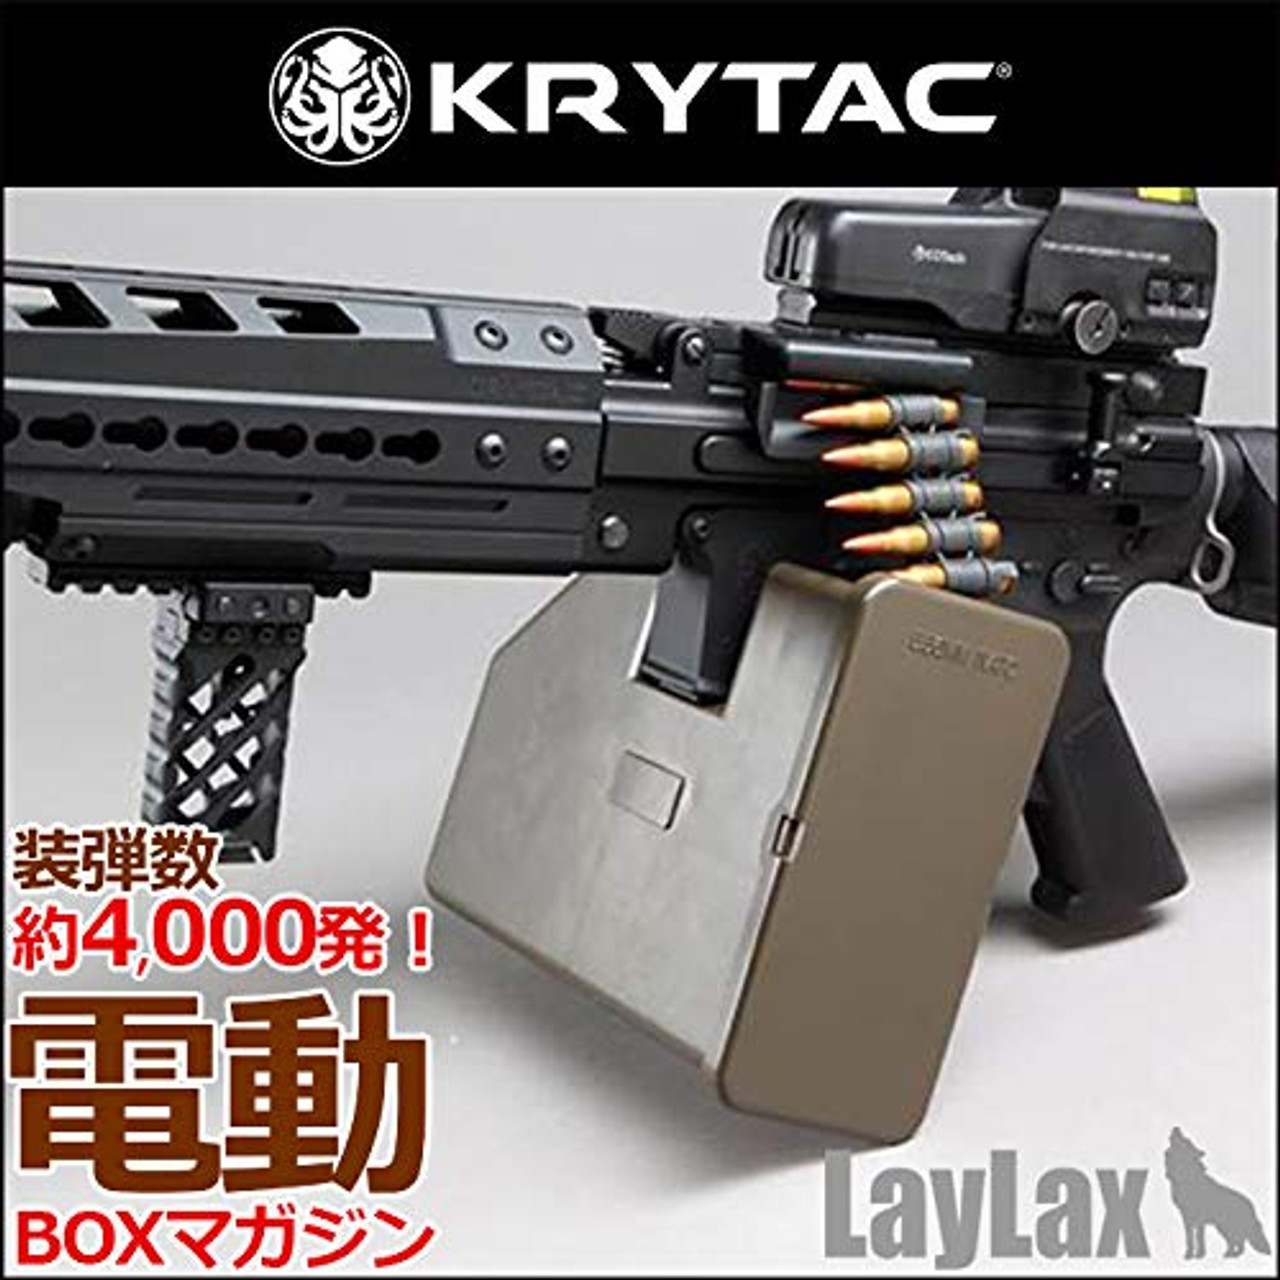 KRYTAC M4 Electric BOX Magazine